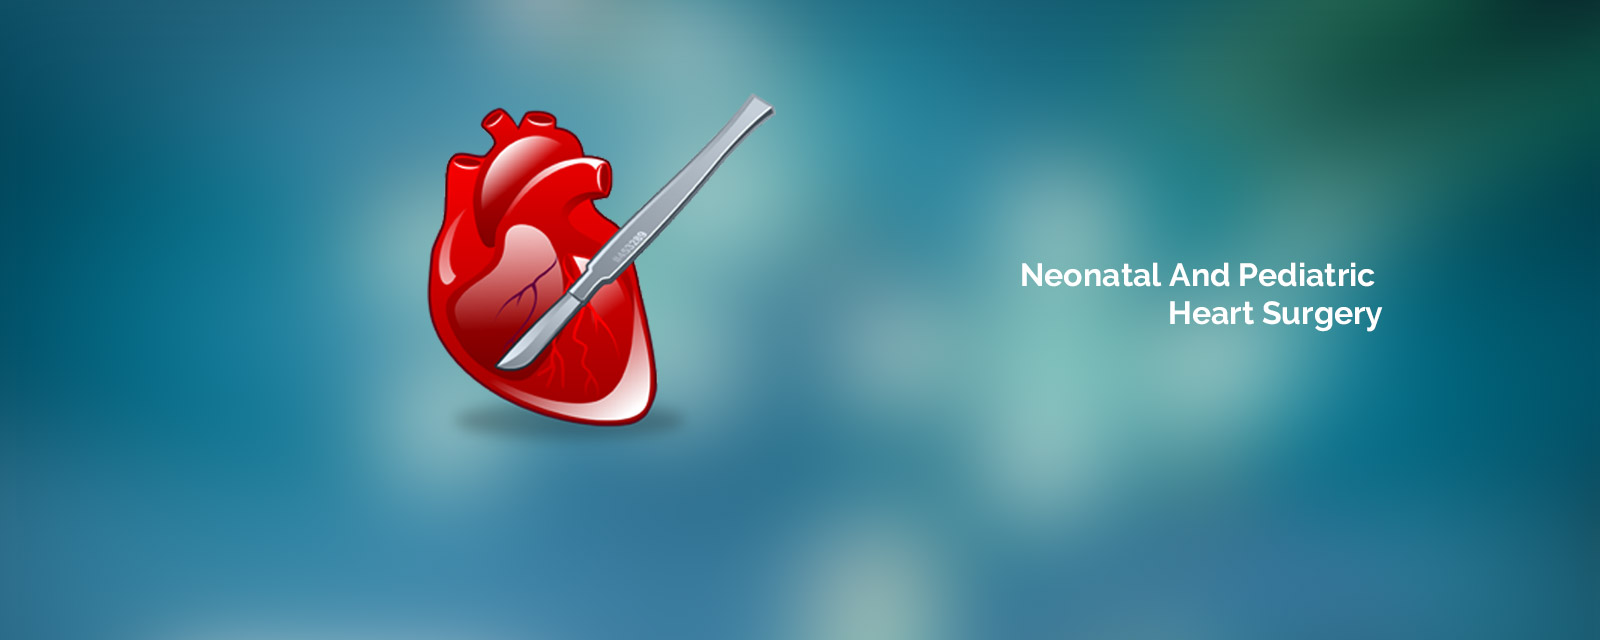 Neonatal And Pediatric Heart Surgery